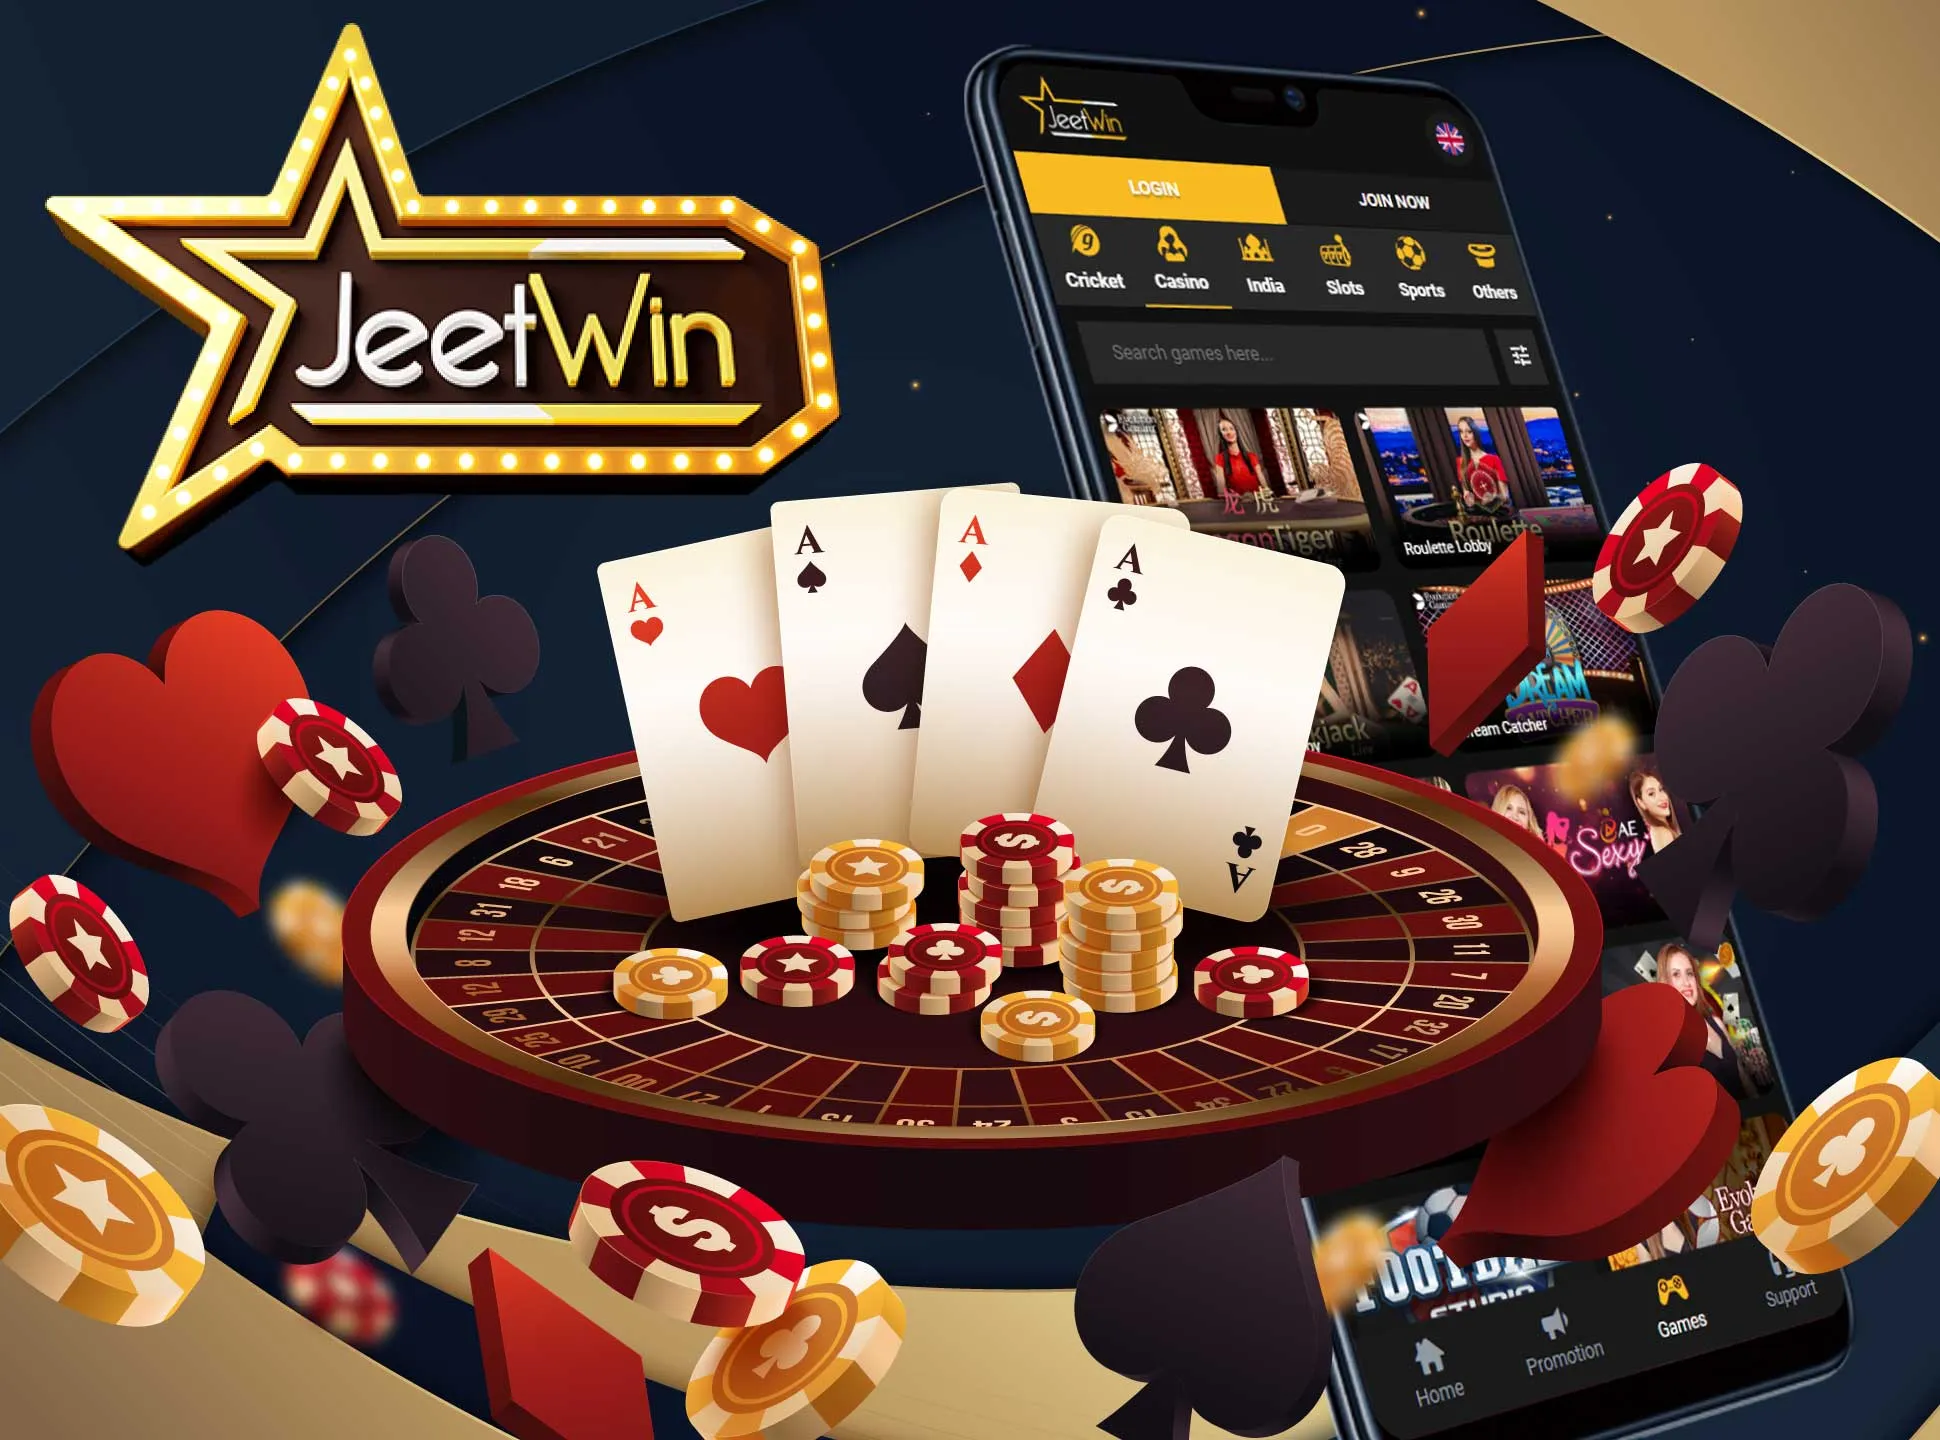 Jeetwin mobile casino allows playing many casino slots.